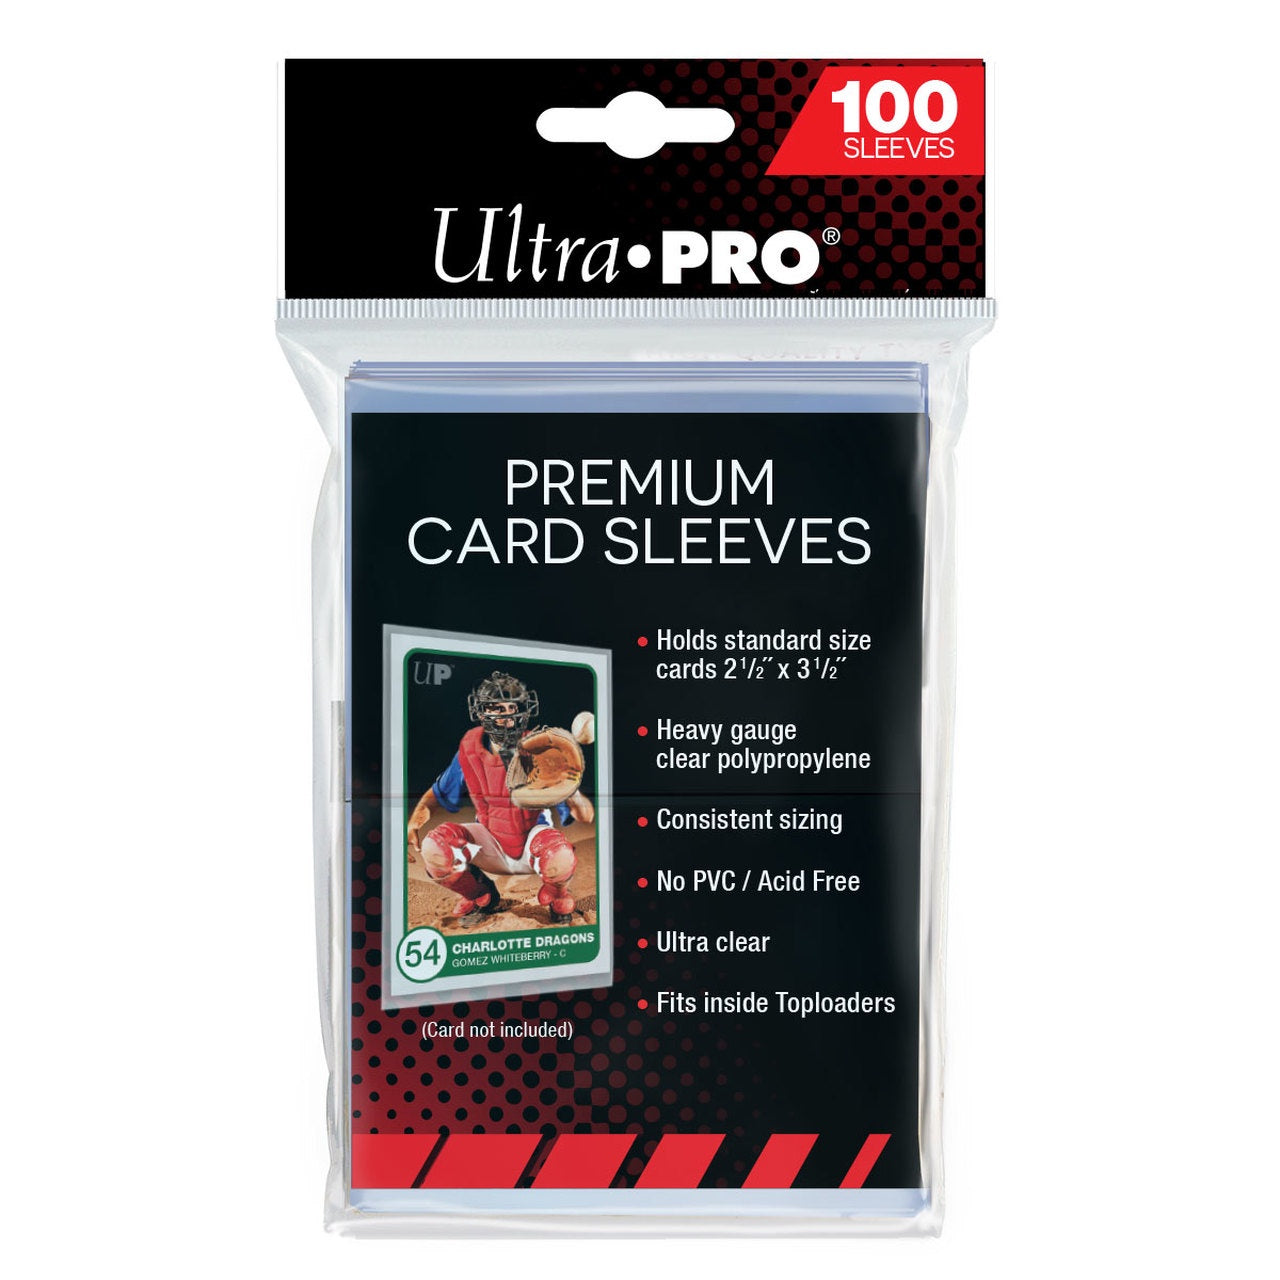 ULTRA PRO PREMIUM CARD SLEEVES 100